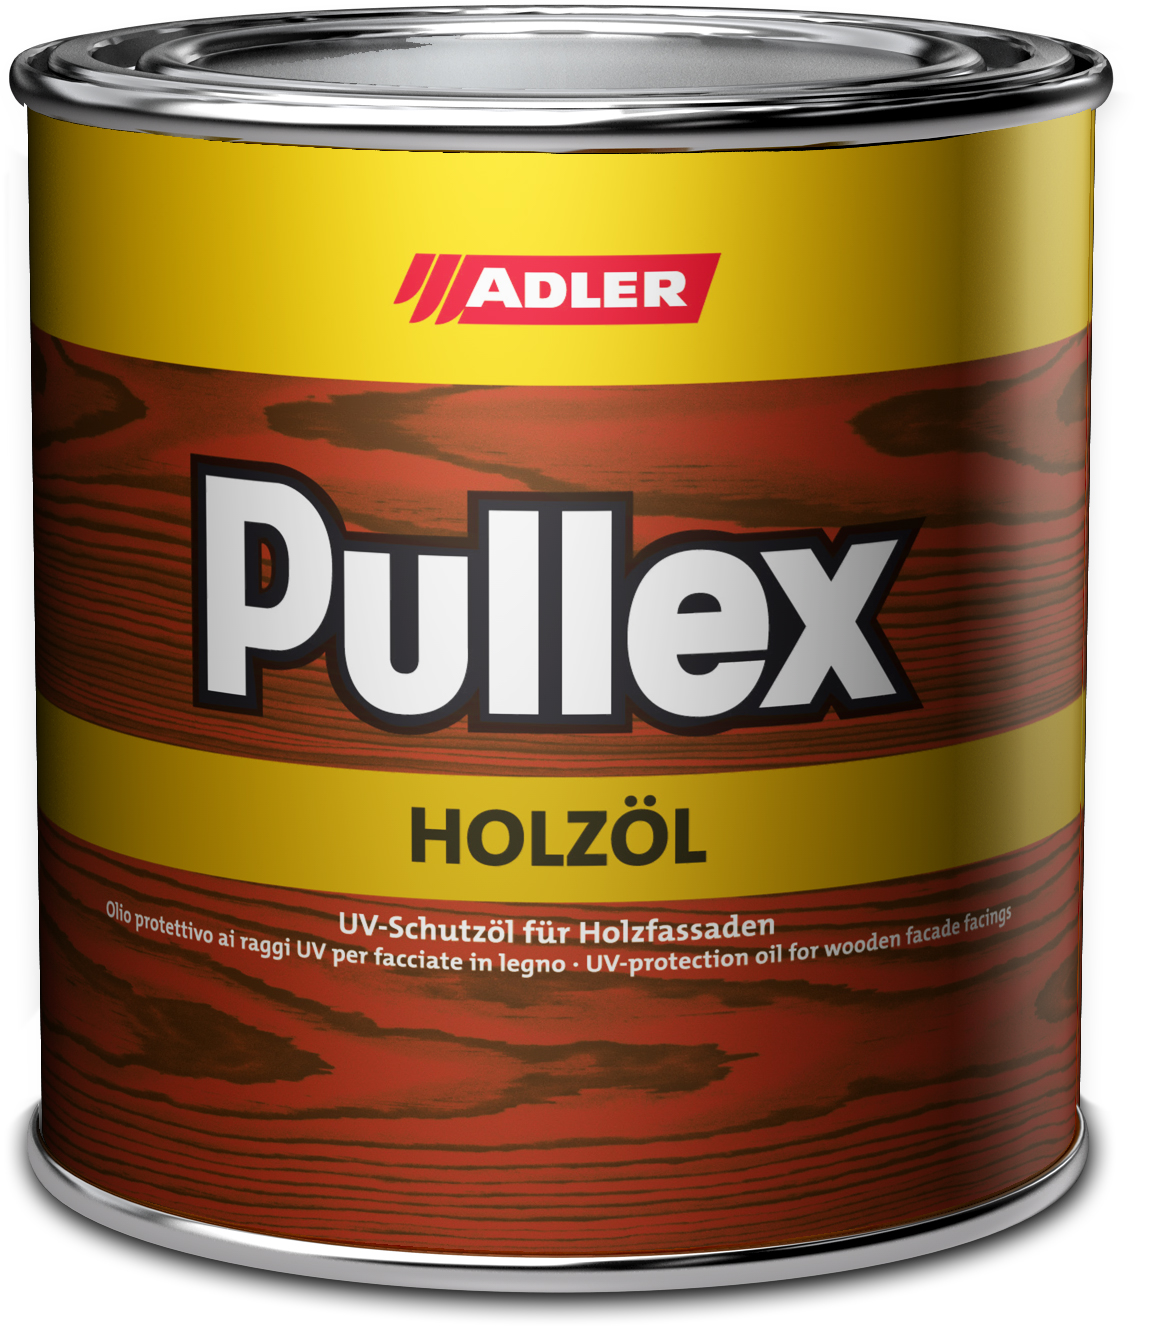 Adler Pullex Holzöl Natur,2.5L